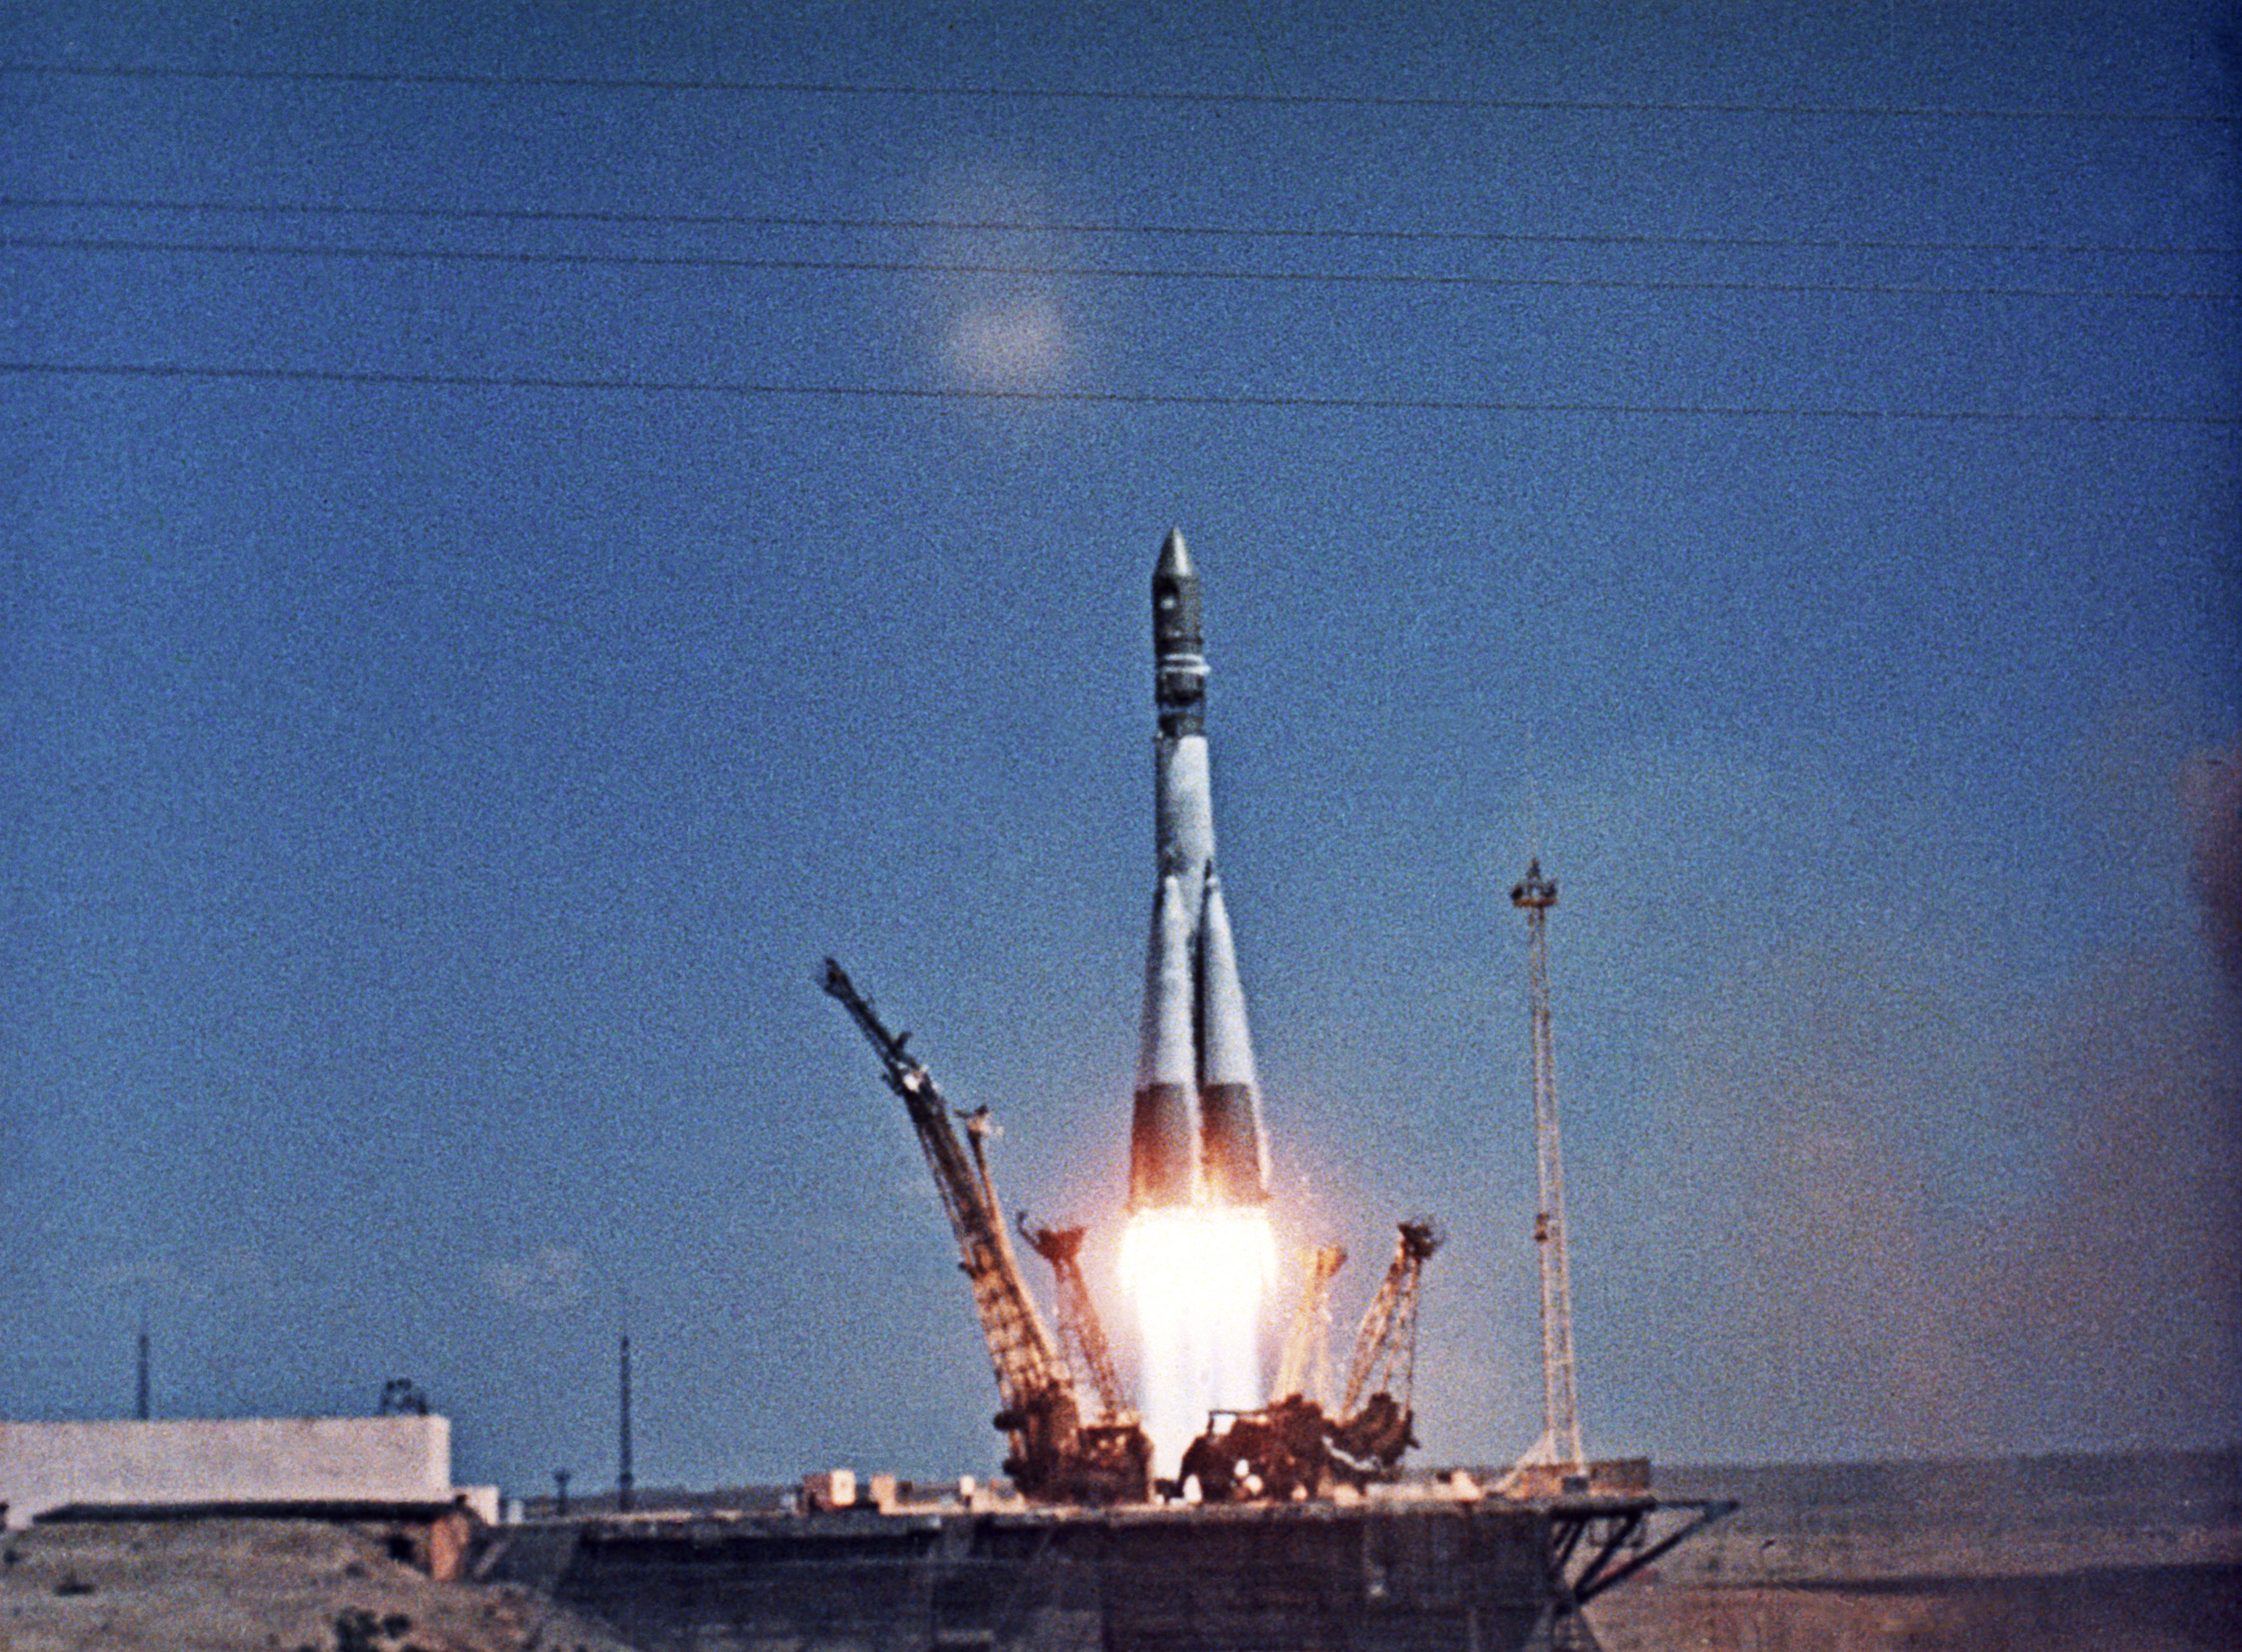 Фото ракеты гагарина. Байконур Восток-1 1961 год. Байконур Восток 1 Гагарин. Космический корабль Восток Юрия Гагарина. Ракета Юрия Гагарина Восток-1.